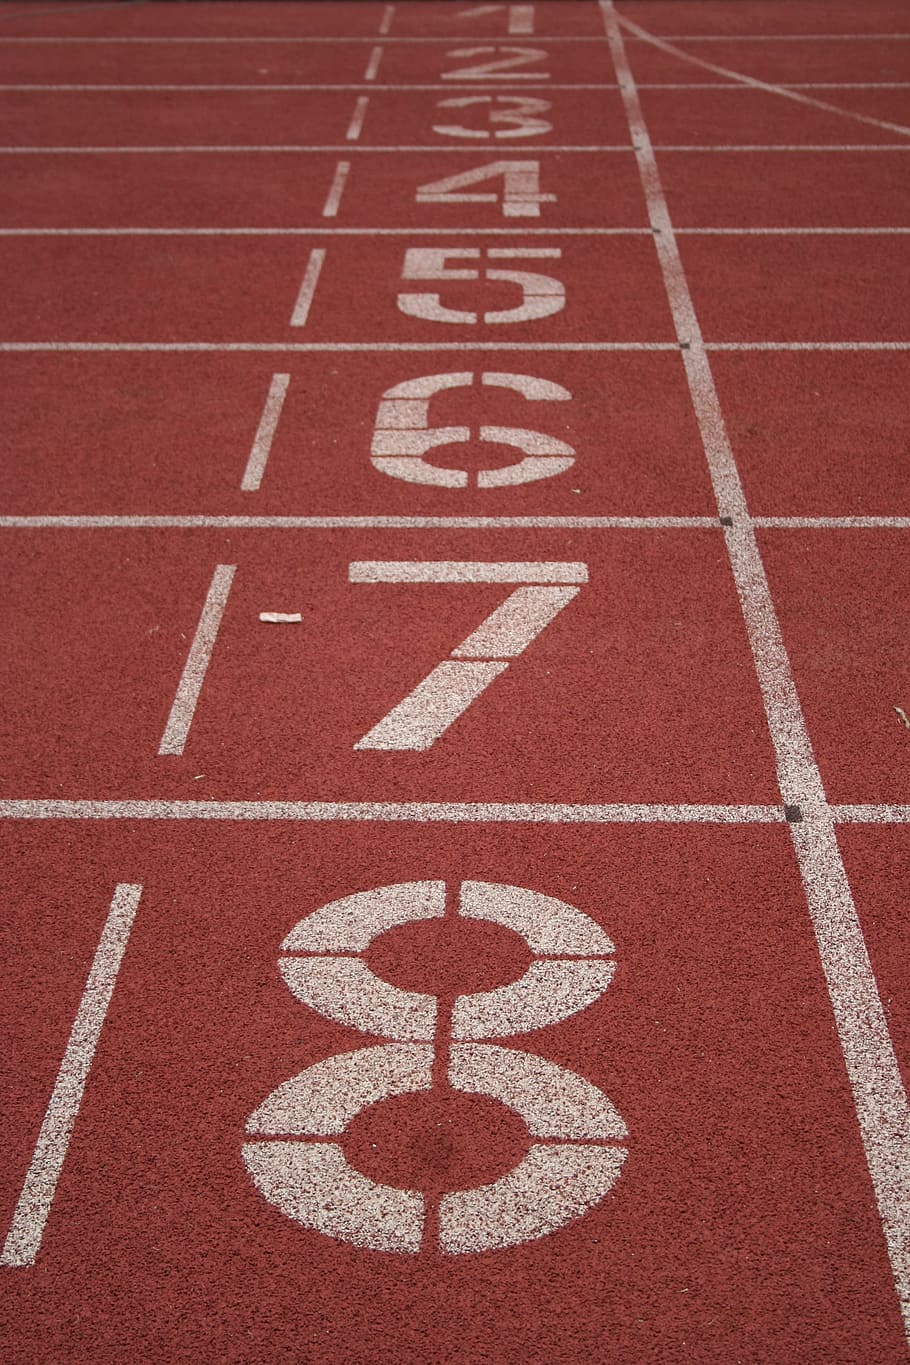 HD wallpaper: track & field starting line, running, sport, numbers